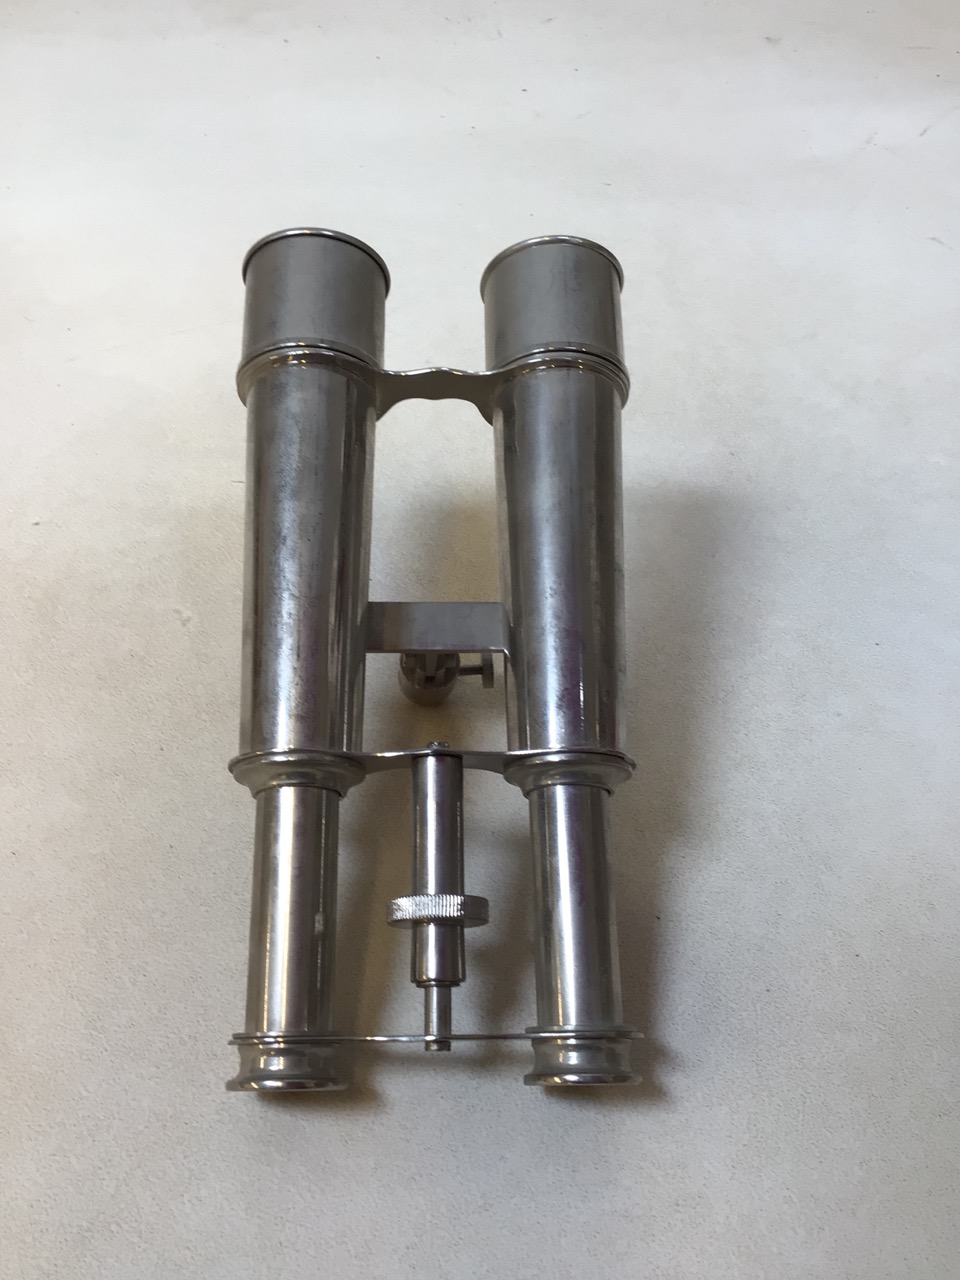 A pair of chrome binoculars with tripod attachment (no tripod) W:11cm x H:21cm - Image 2 of 4